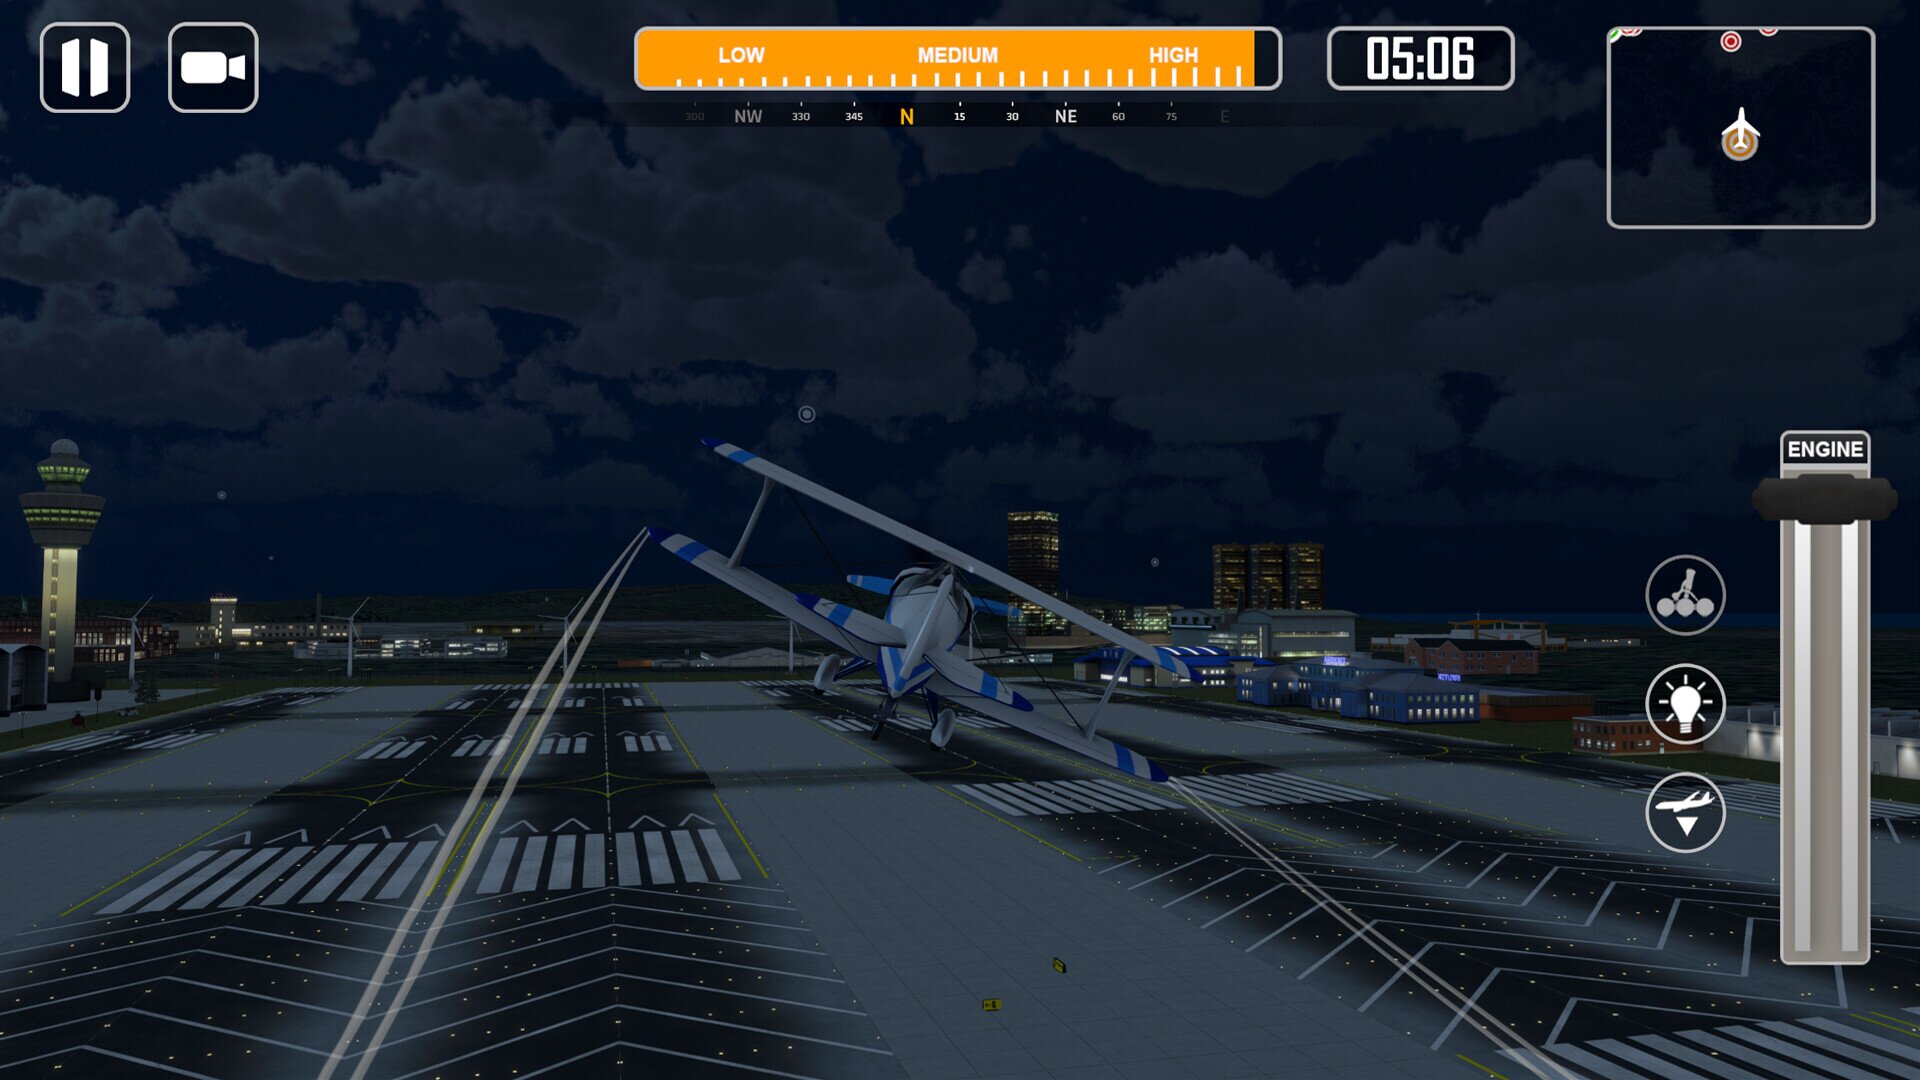 Ultimate Flight Simulator Pro download the new version